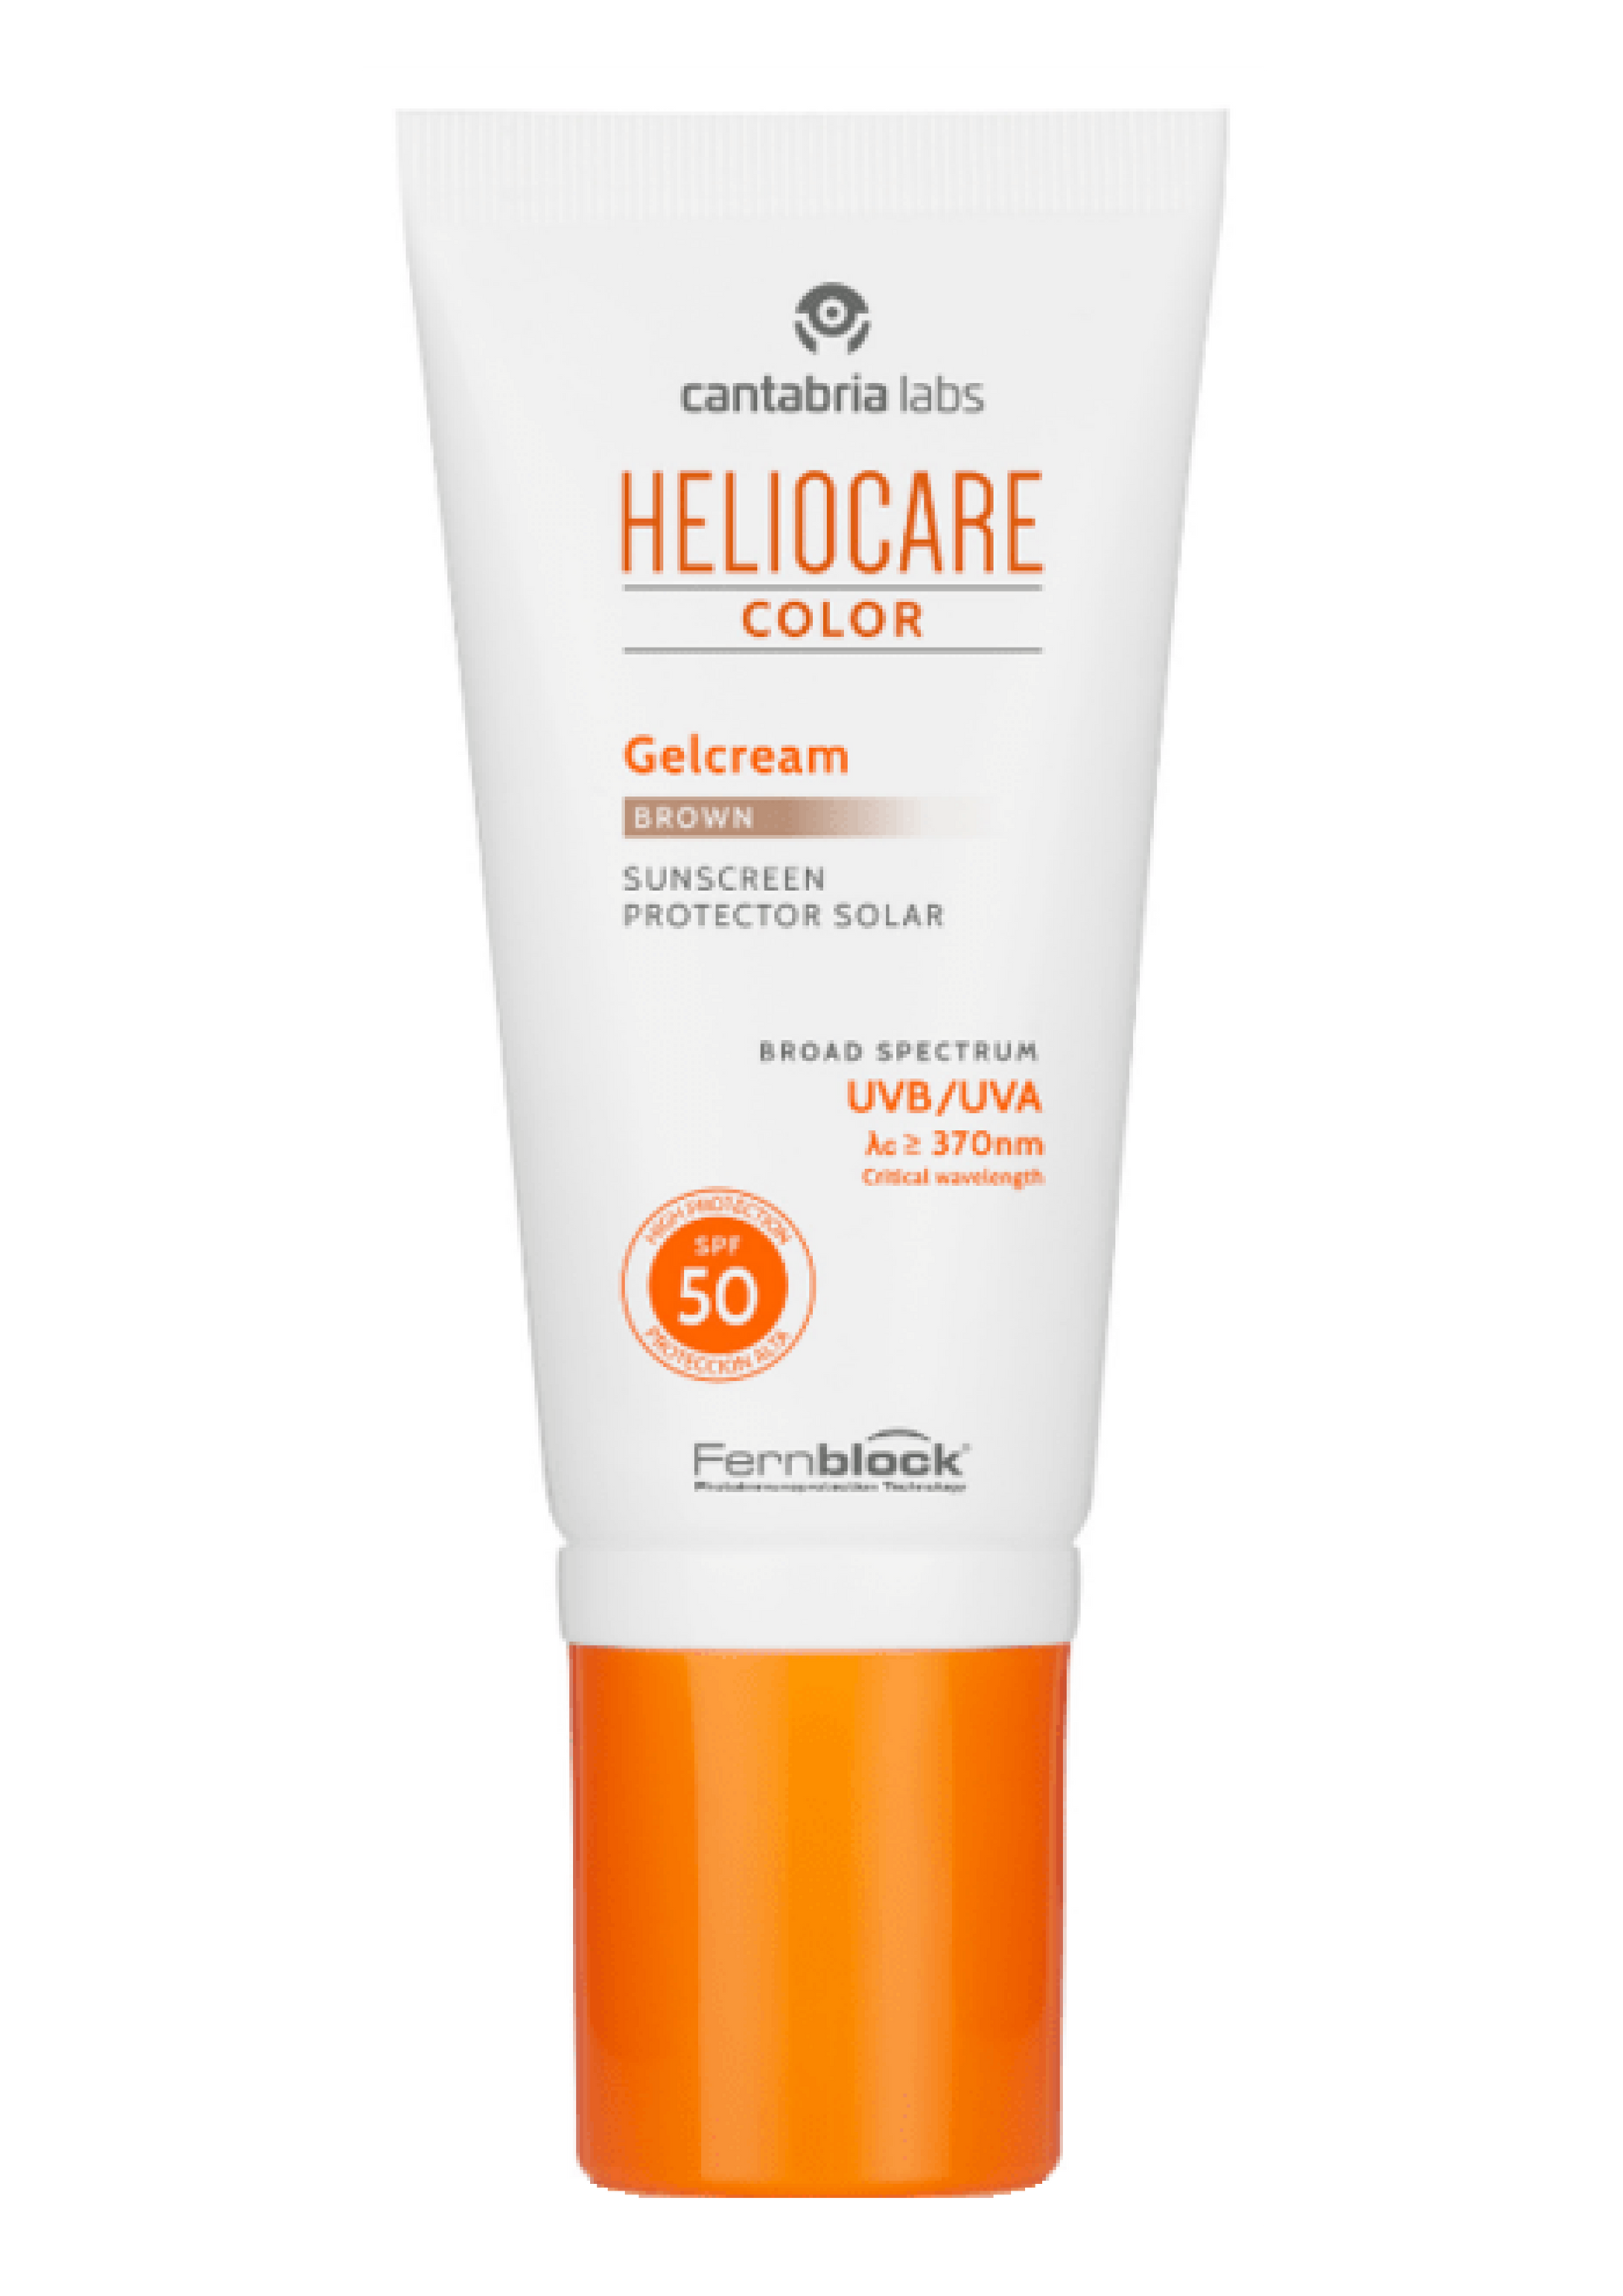 Heliocare® Color Gelcream SPF 50